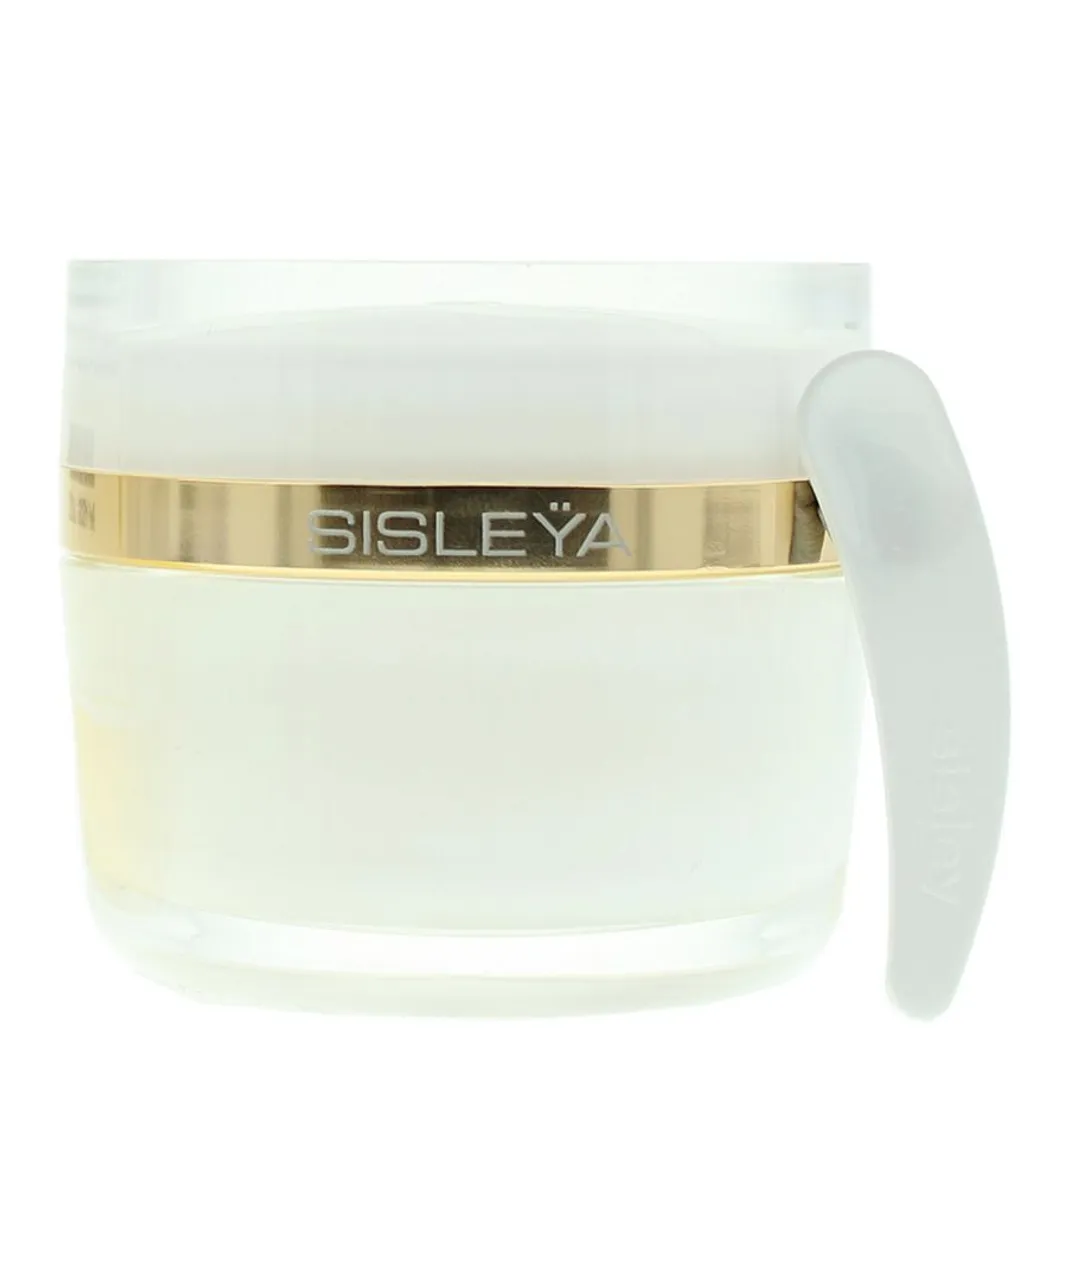 Sisley Womens Sisleÿa L'Integral Anti-Age Cream 50ml Day And Night - One Size